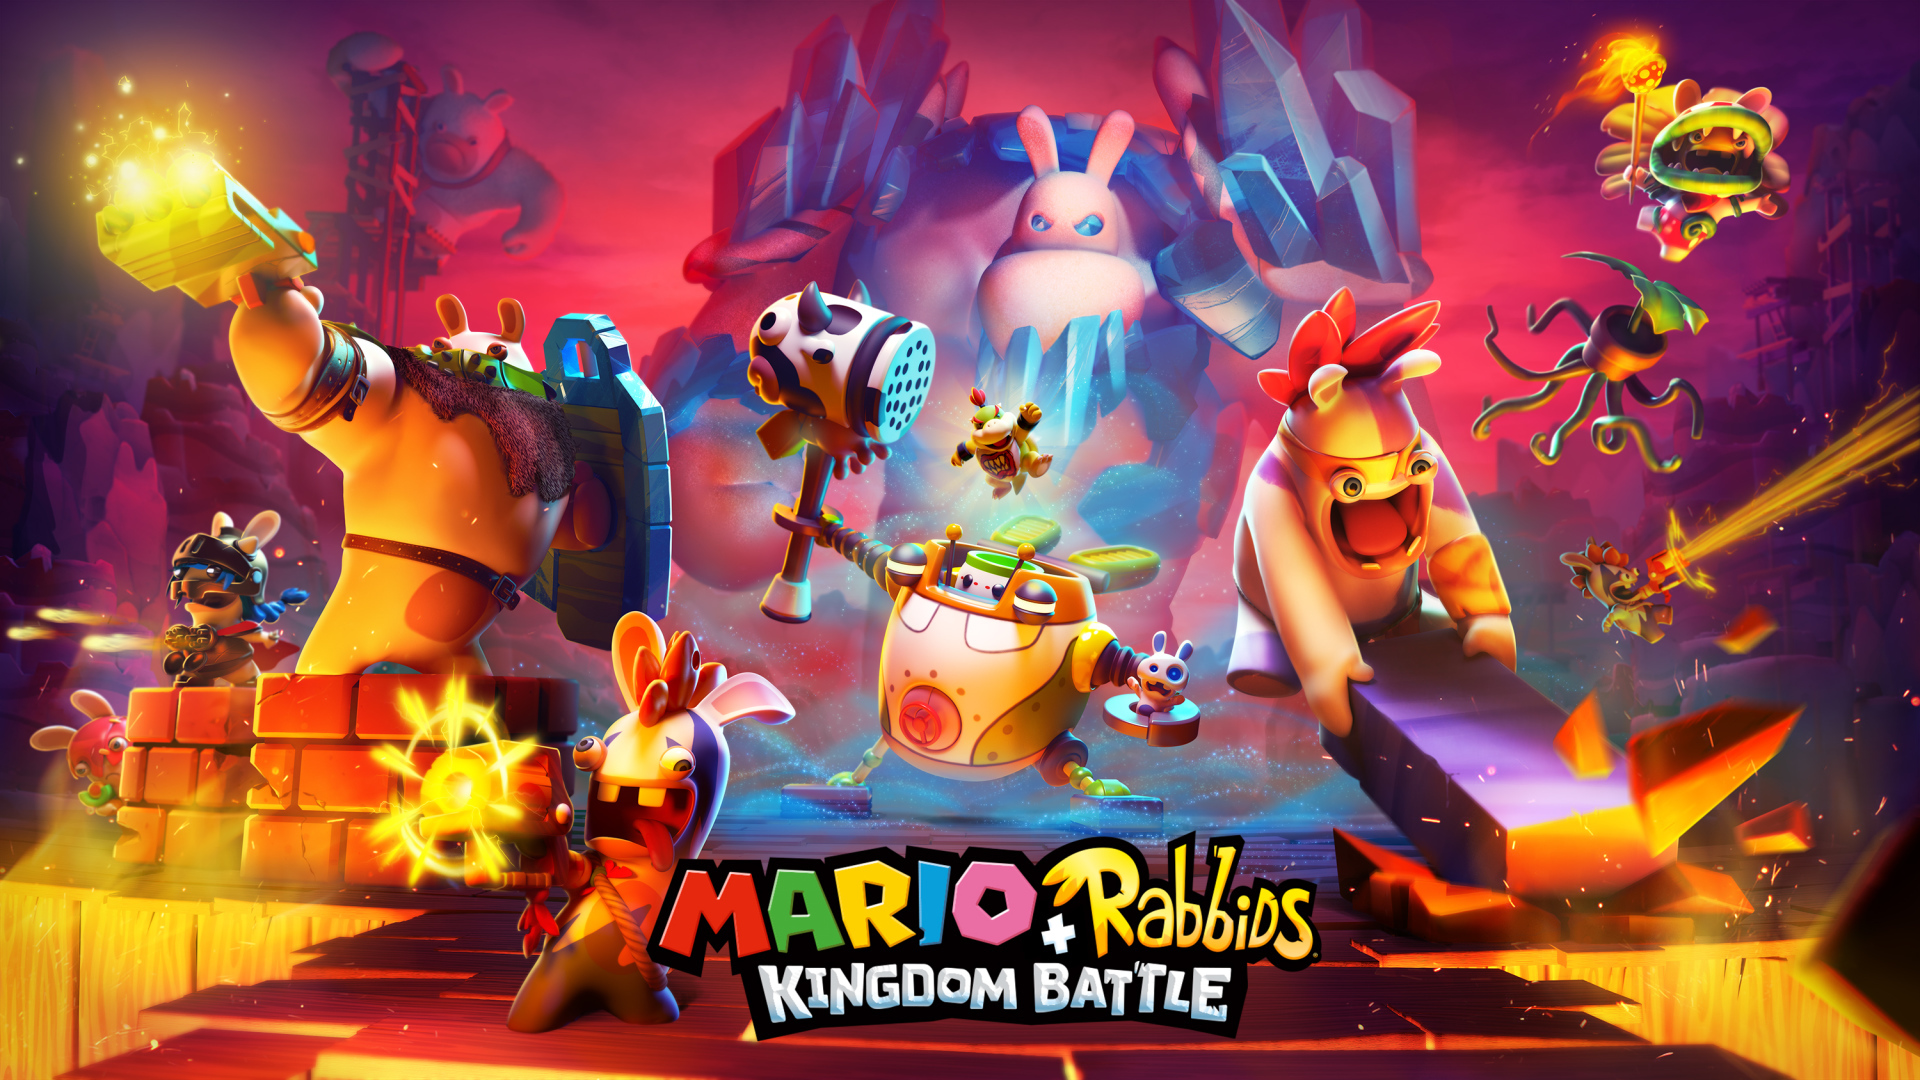 Computer game poster Mario + Rabbids Kingdom Battle, 2017